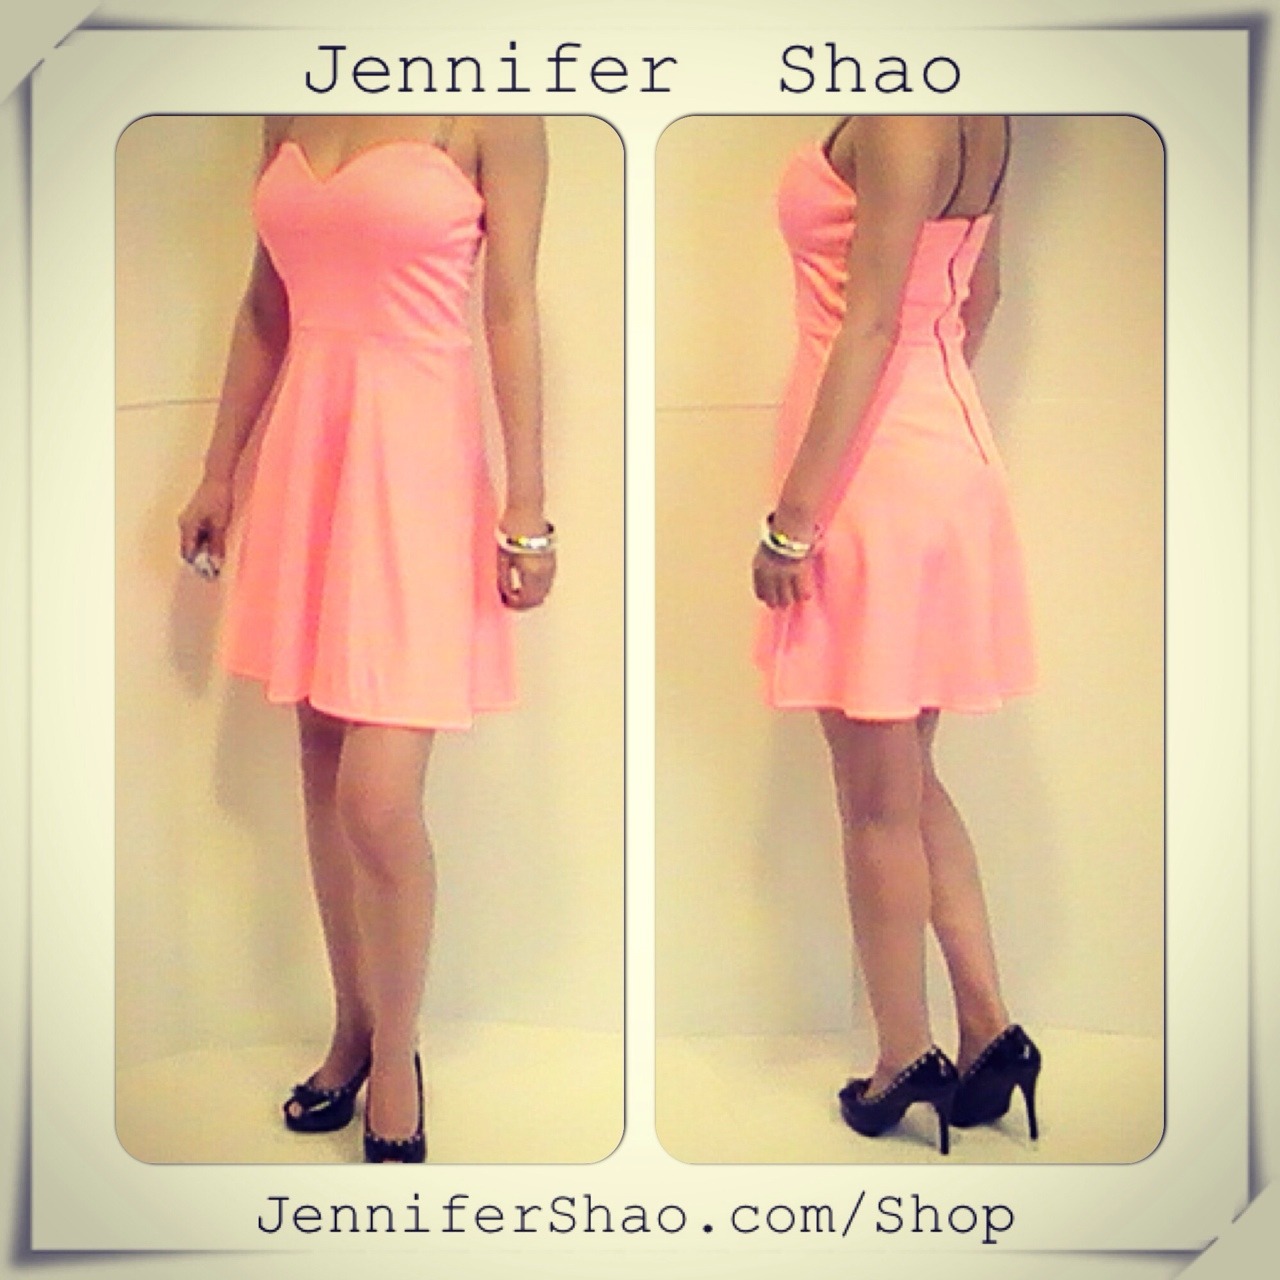 Pairing my Silver Bangles with this dress =) JENNIFERSHAO.COM/SHOP | http://instagram.com/p/pM2bn3qiNG/ | http://tmblr.co/ZMrjev1IdCqxq